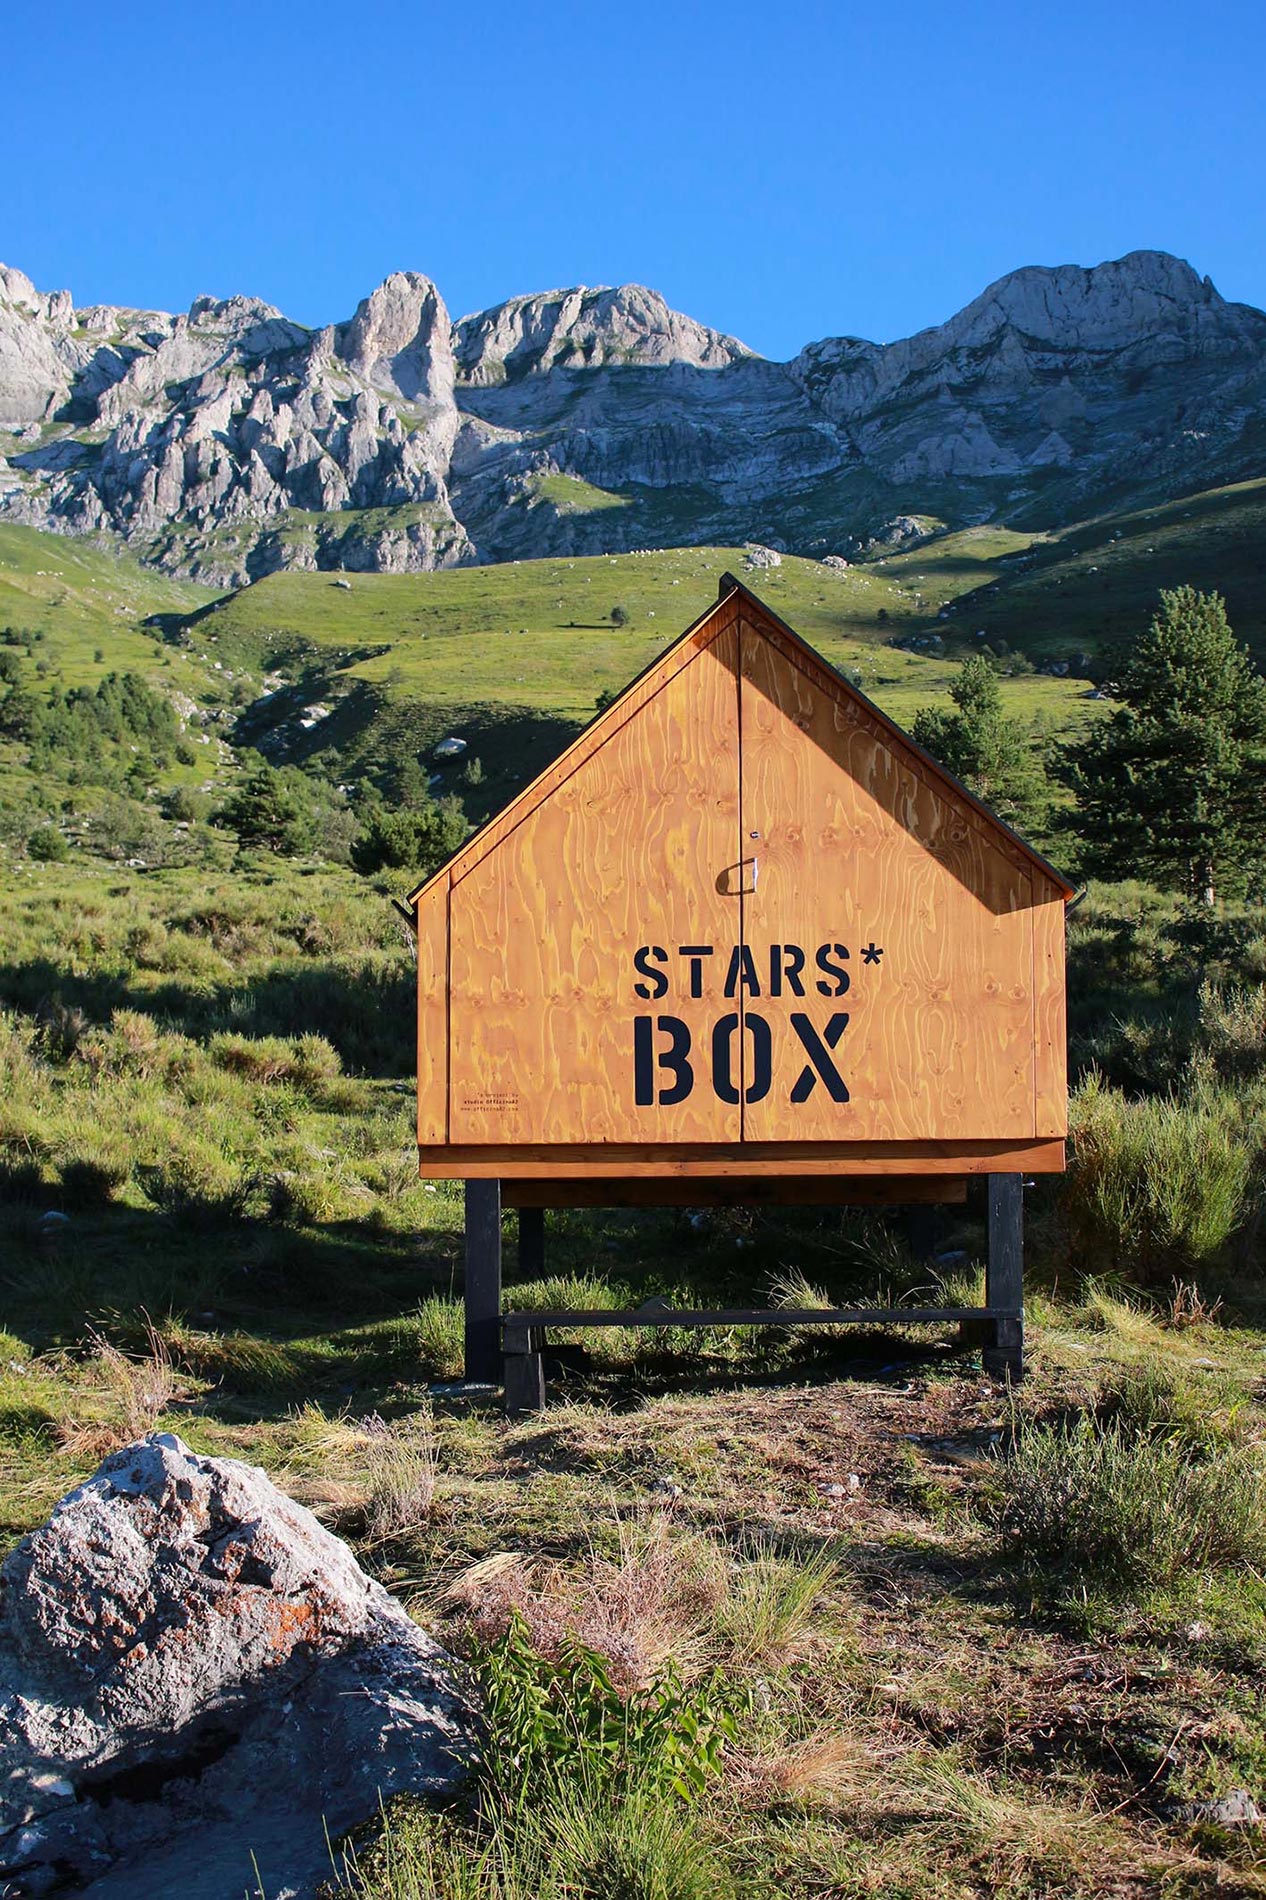 starsbox capsule mountain hotel